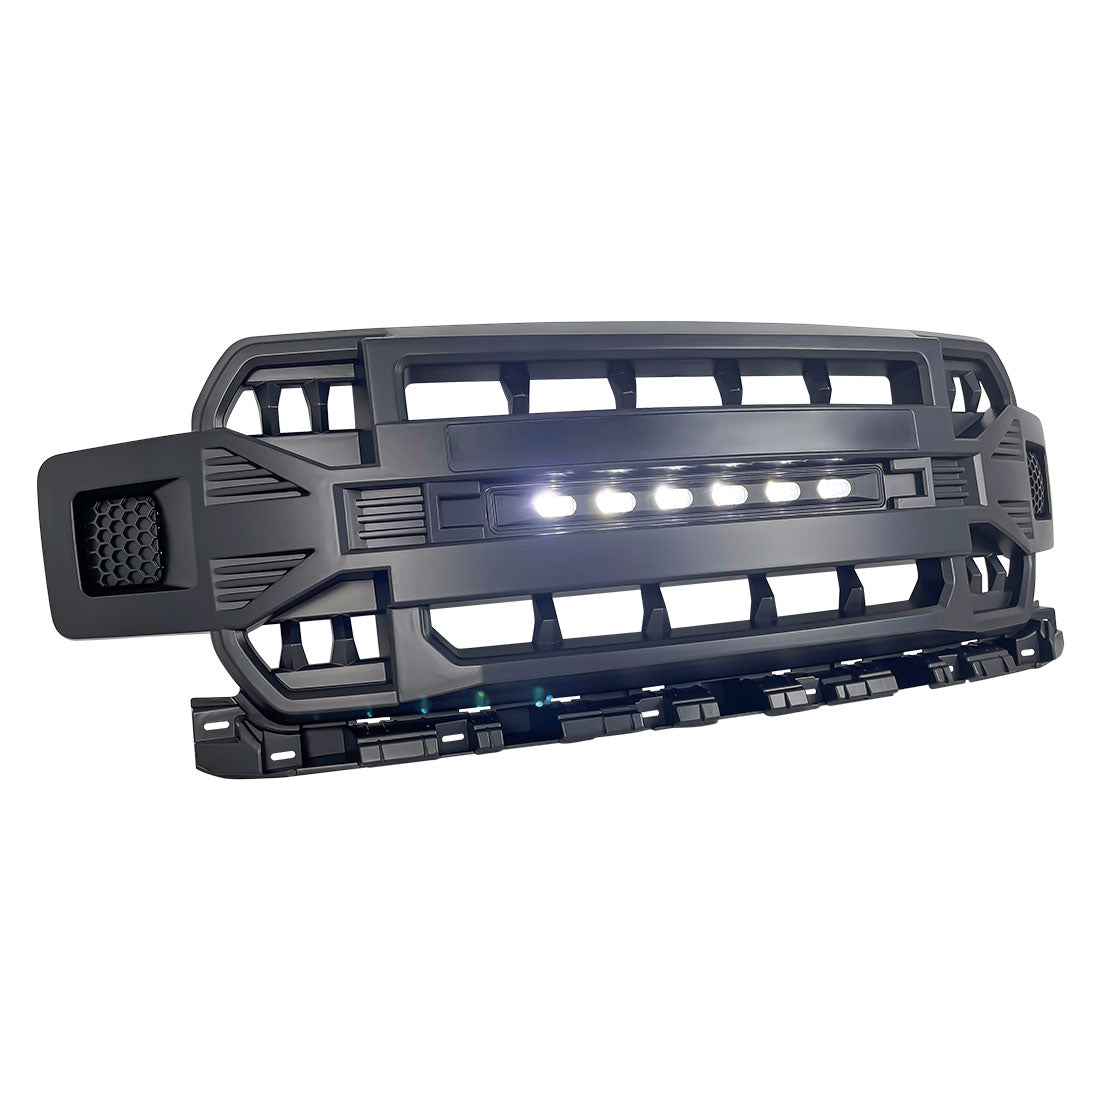 Armor Grille wOff-Road Lights - Matte Black for 2018-2020 Ford F150